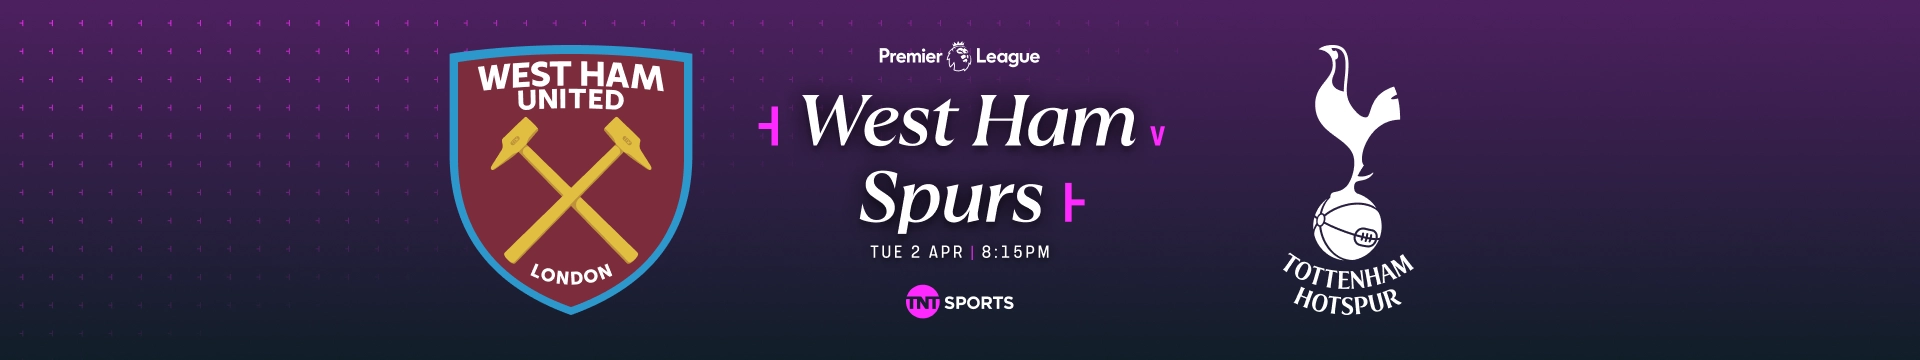 West Ham v Spurs Tuesday 2 April at 8:15pm